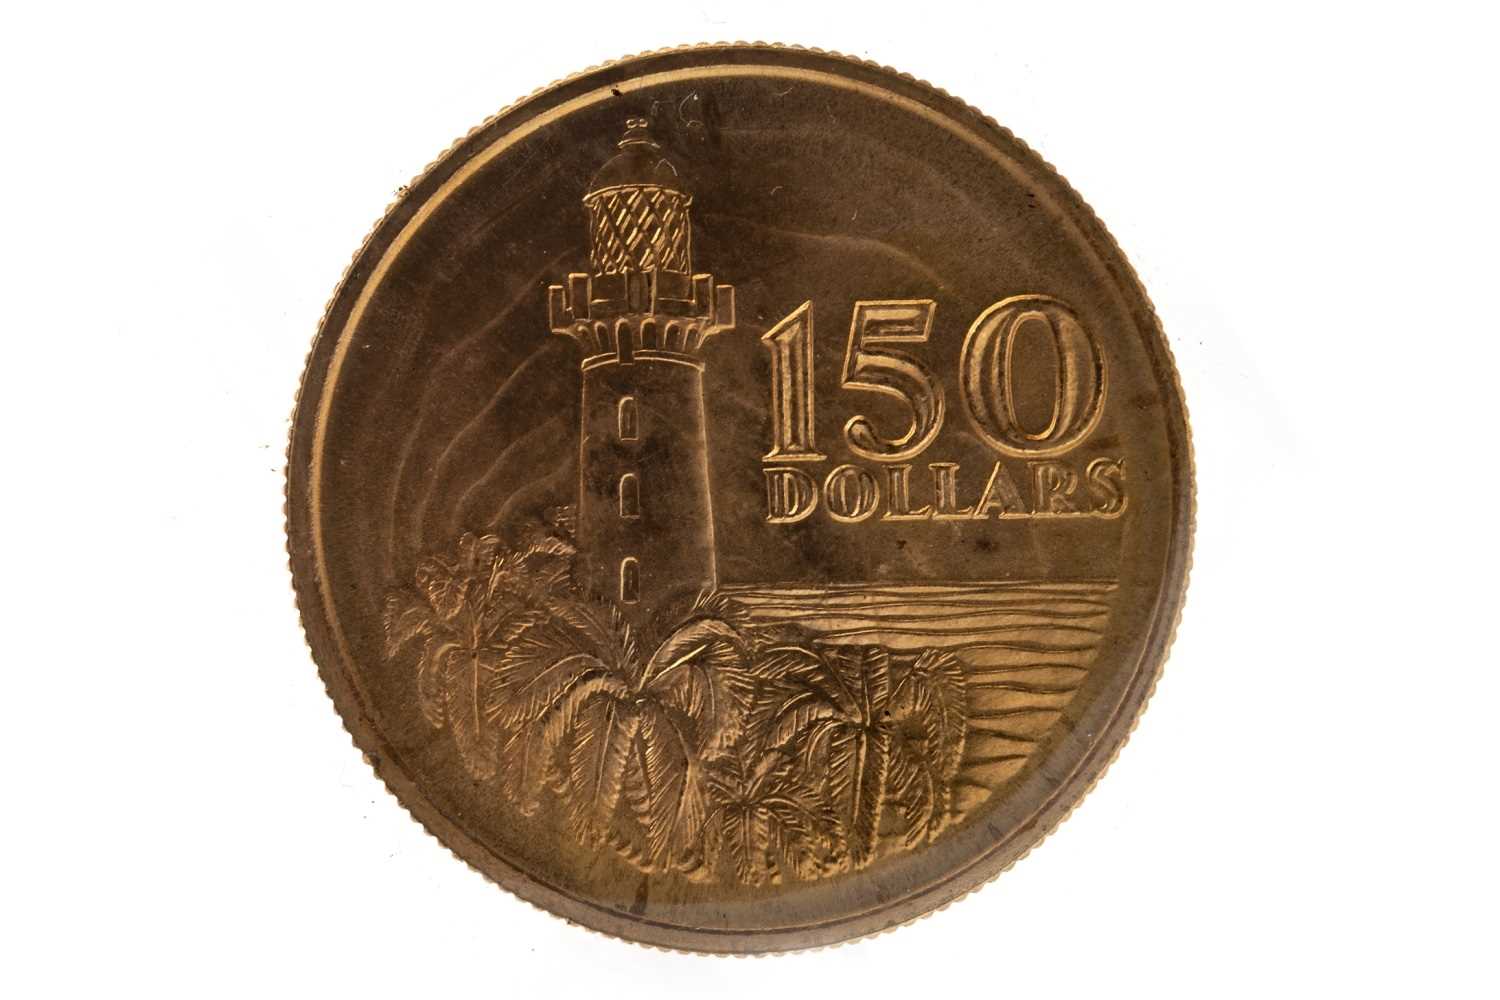 Lot 627 - A GOLD SINGAPORE 150 DOLLAR COIN, 1819-1969